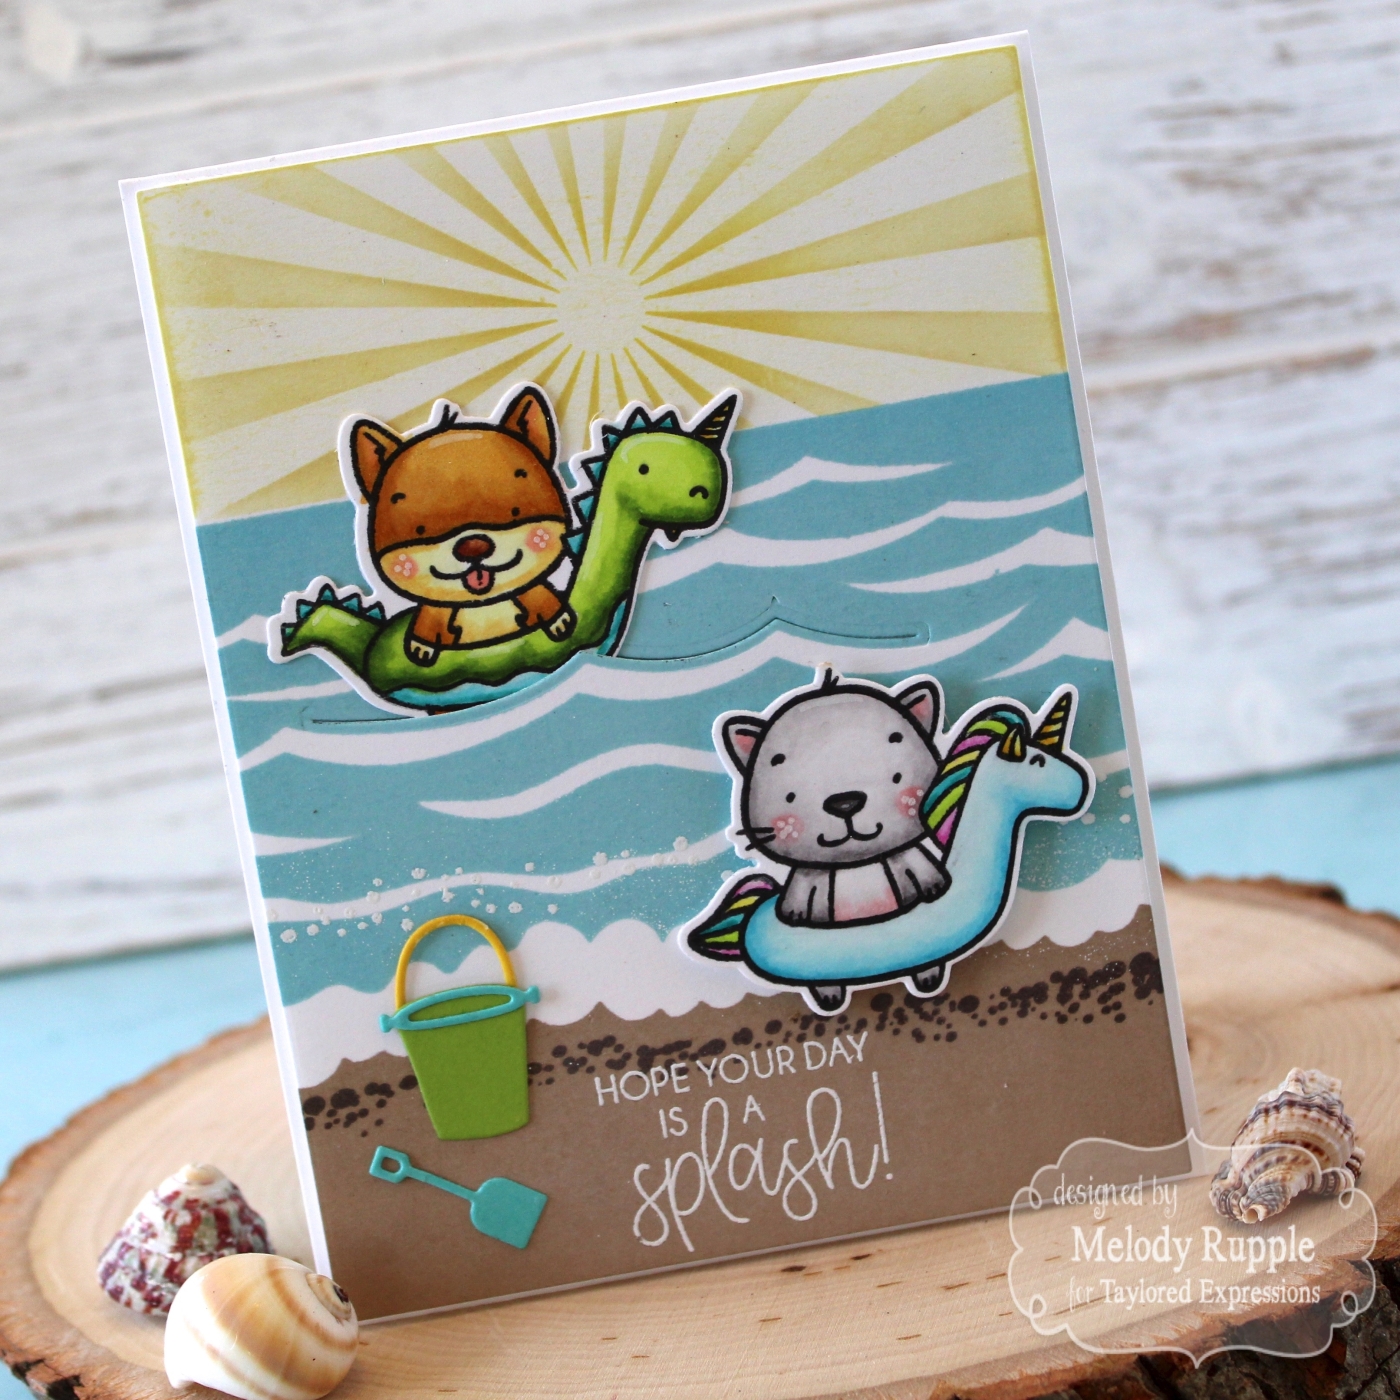 Pretty Cute Stamps Blog: Sneak Peek Day 1 ~ Sprinkled with Fun